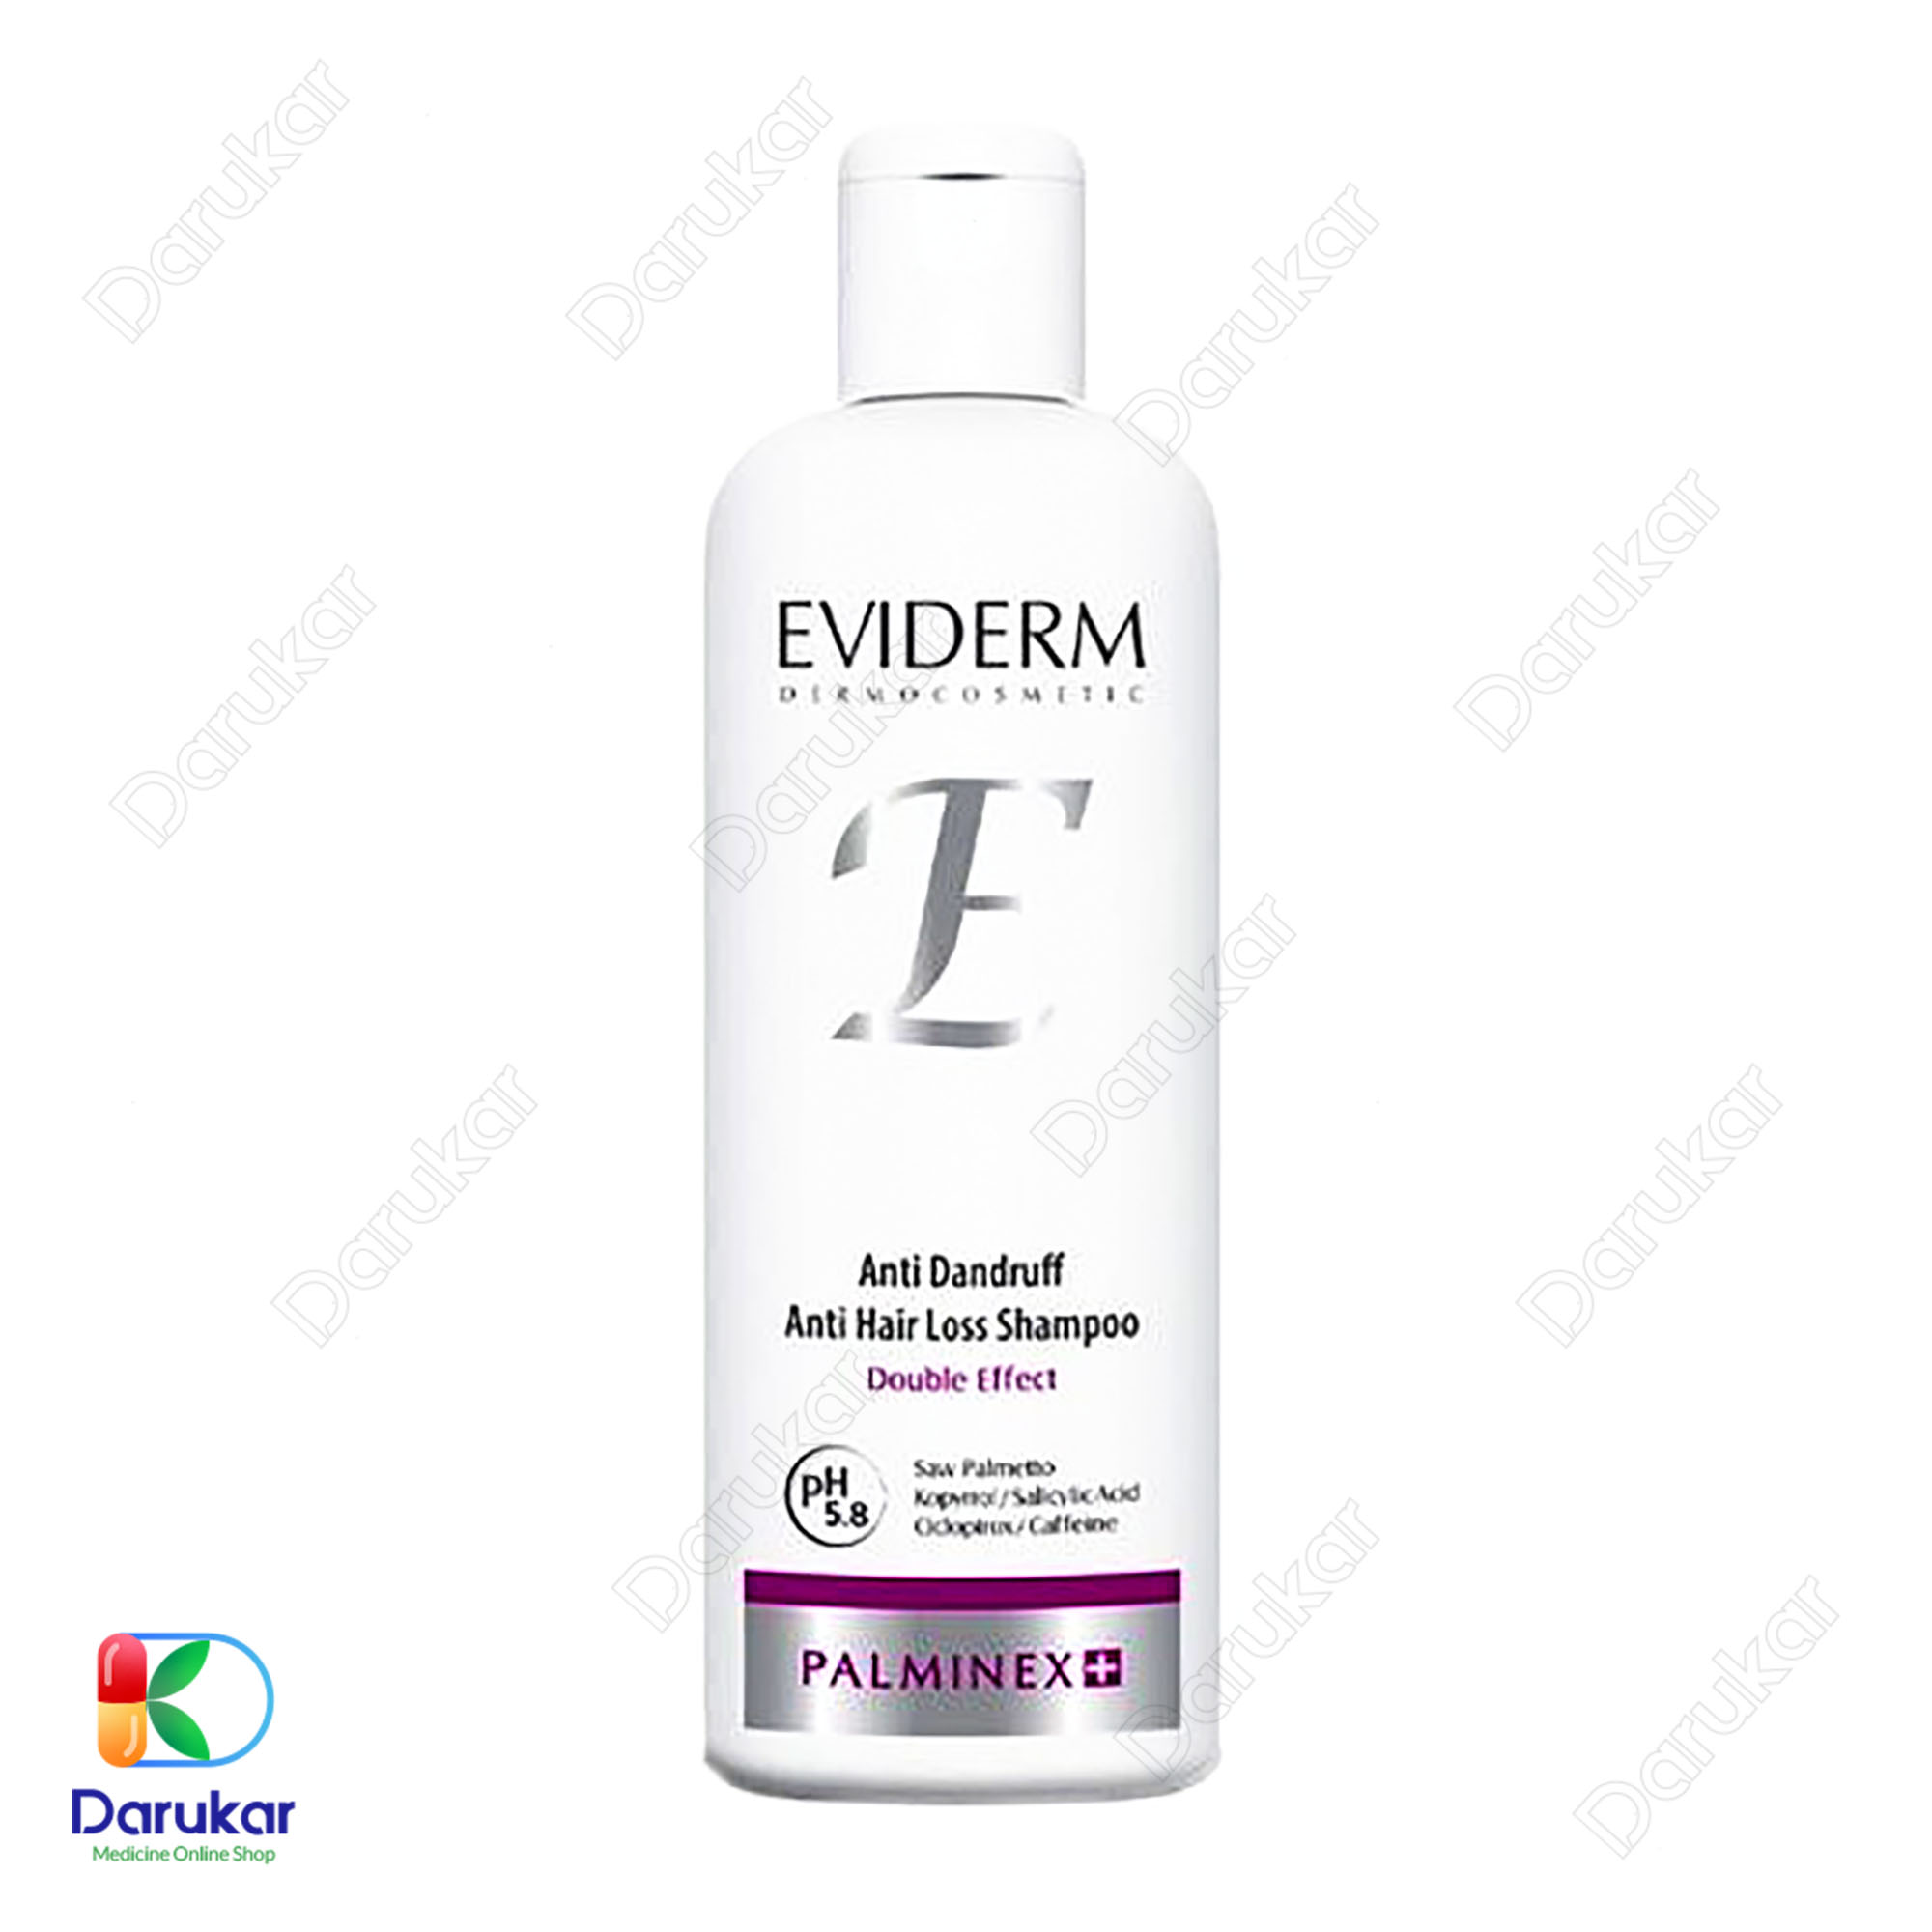 Eviderm Palminex Plus Anti Hair Loss And Anti Dandruff Shampoo 1